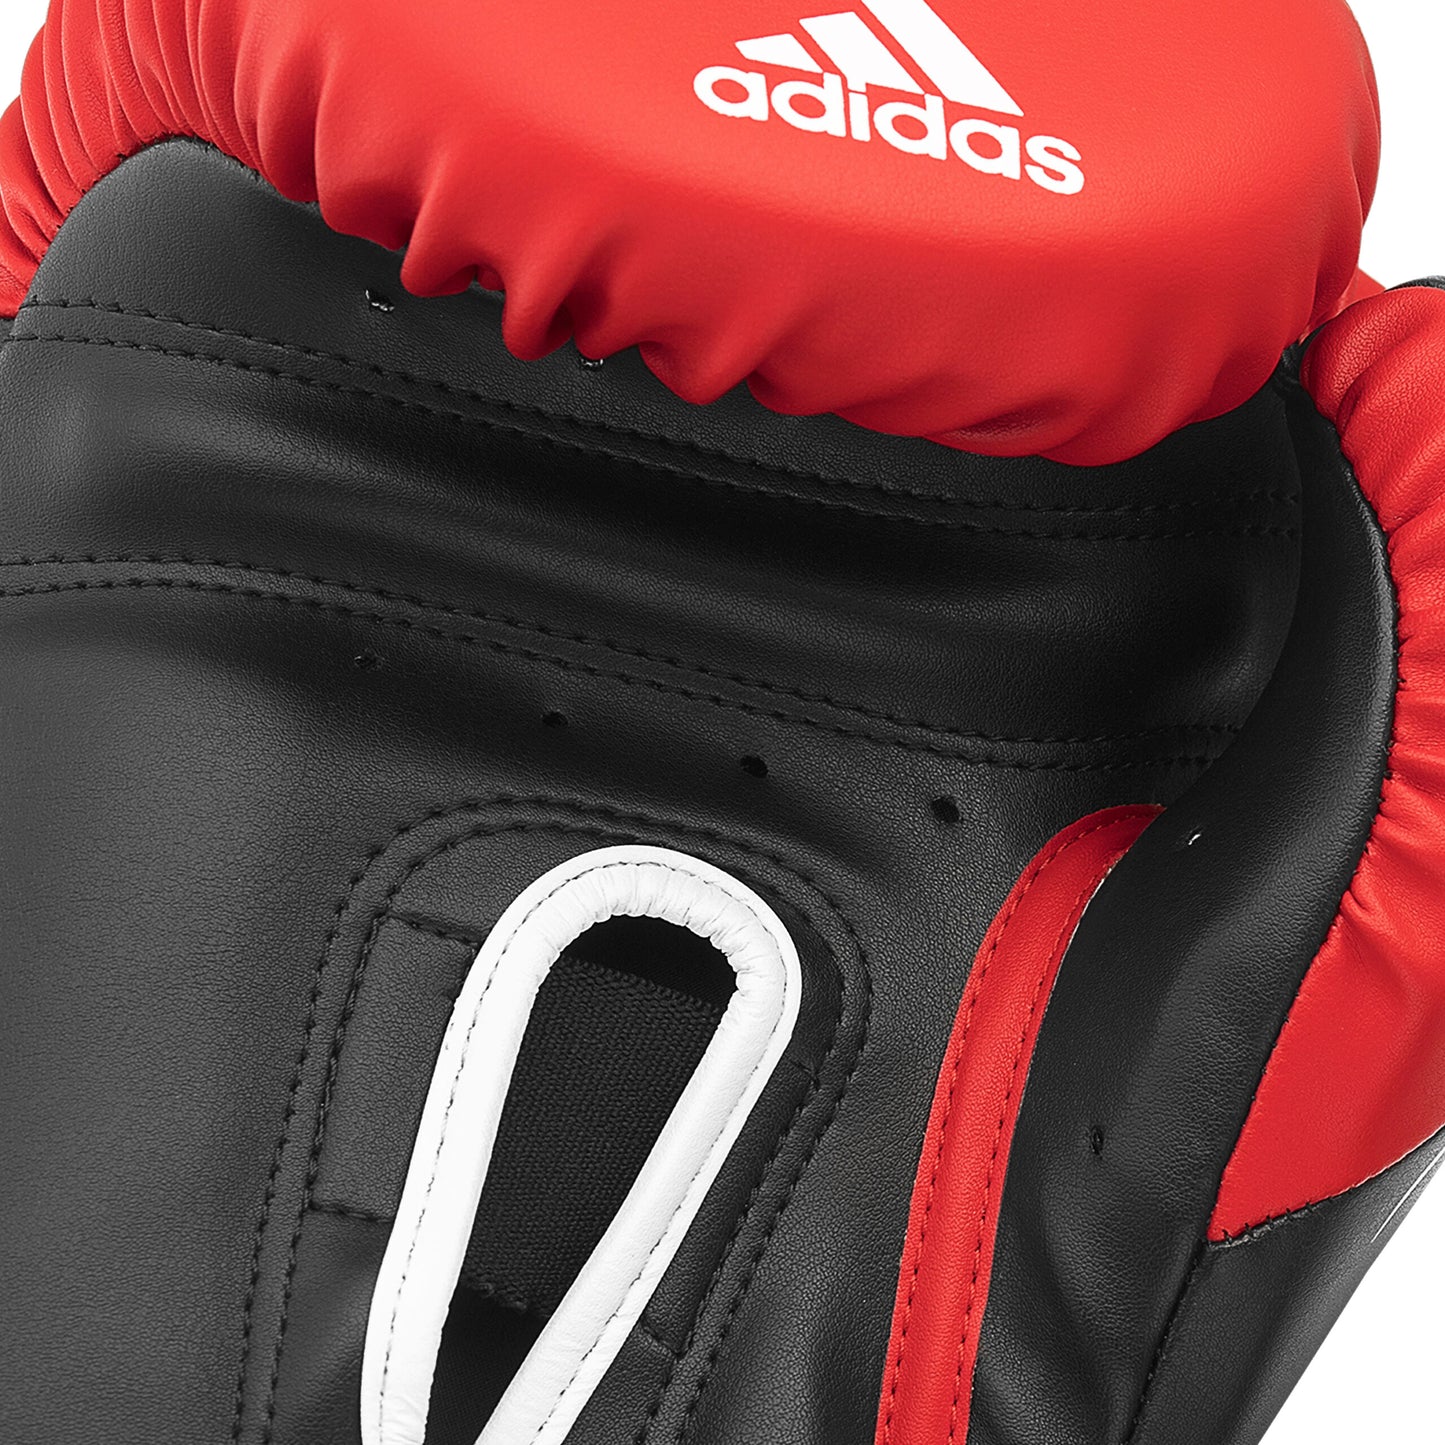 Adispd350tg Adidas Tilt 350 Pro Training Boxing Glove Strap Active Red Black 06